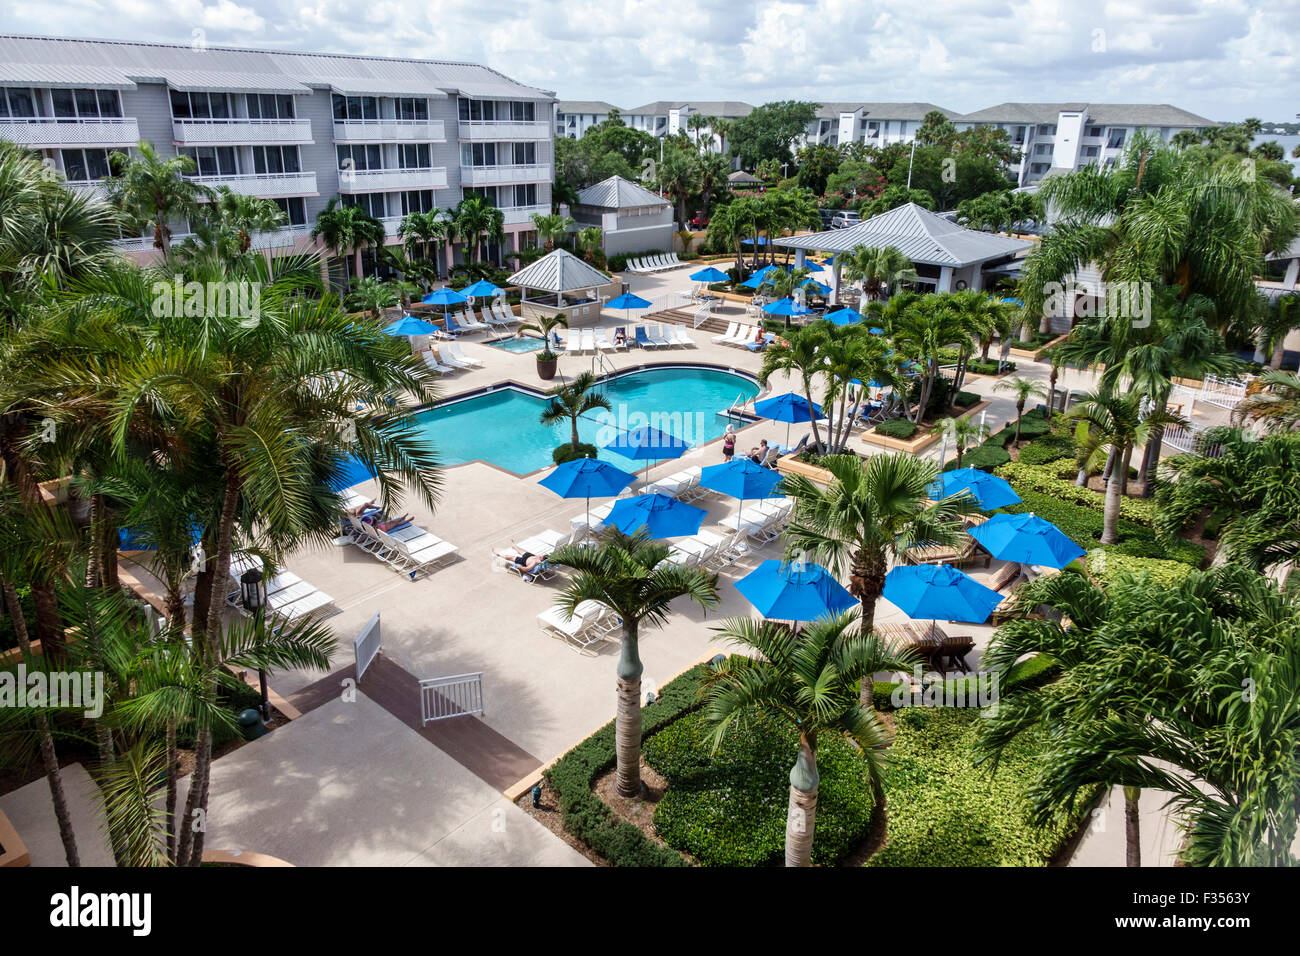 Stuart Florida,Hutchinson Barrier Island Marriott Beach Resort & Marina,hotel,swimming pool area,palm trees,FL150416001 Stock Photo